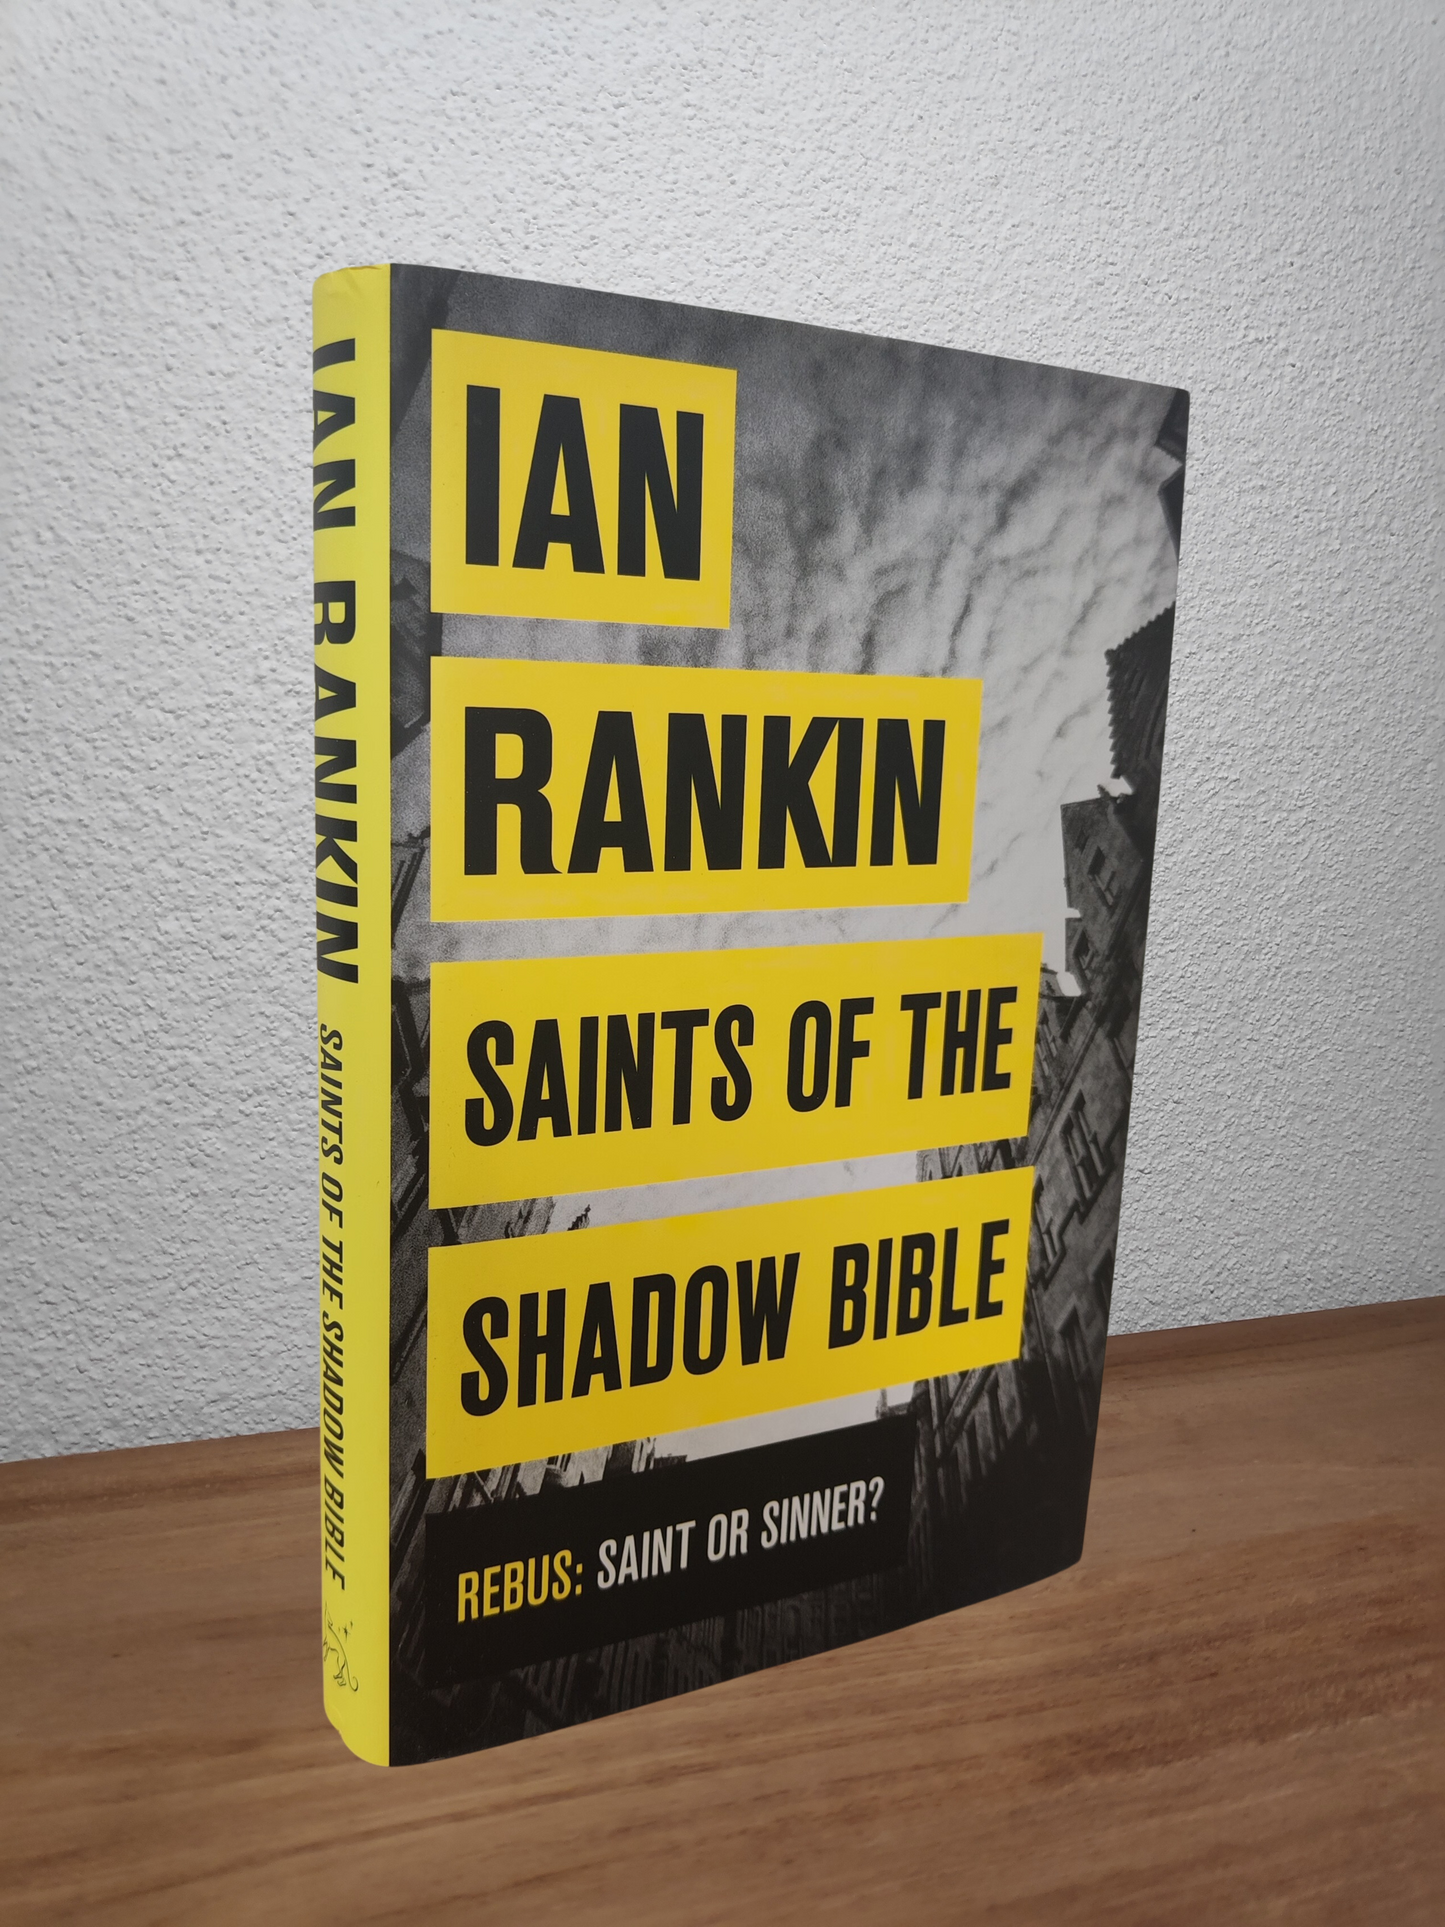 Ian Rankin - Saints of the Shadow Bible (Inspector Rebus #19)